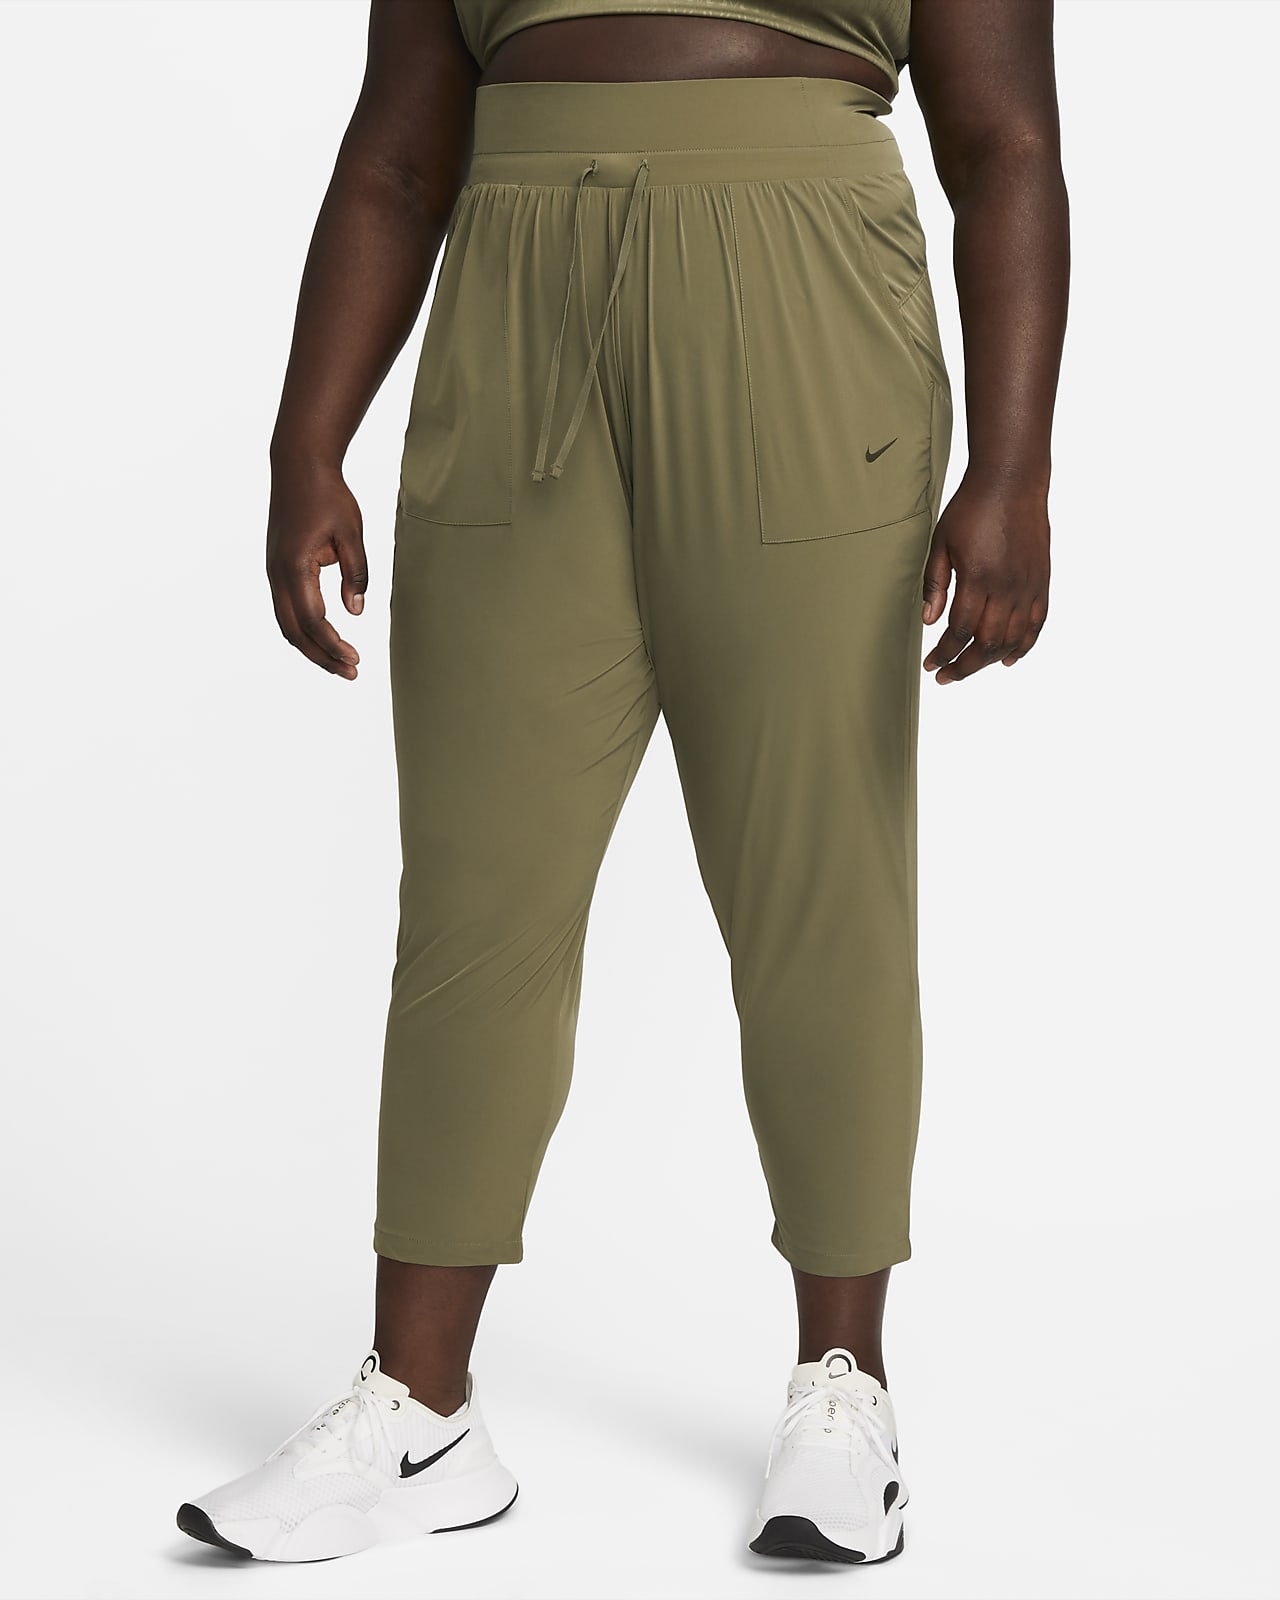 Luxe Women's 7/8 Pants (Plus Nike.com